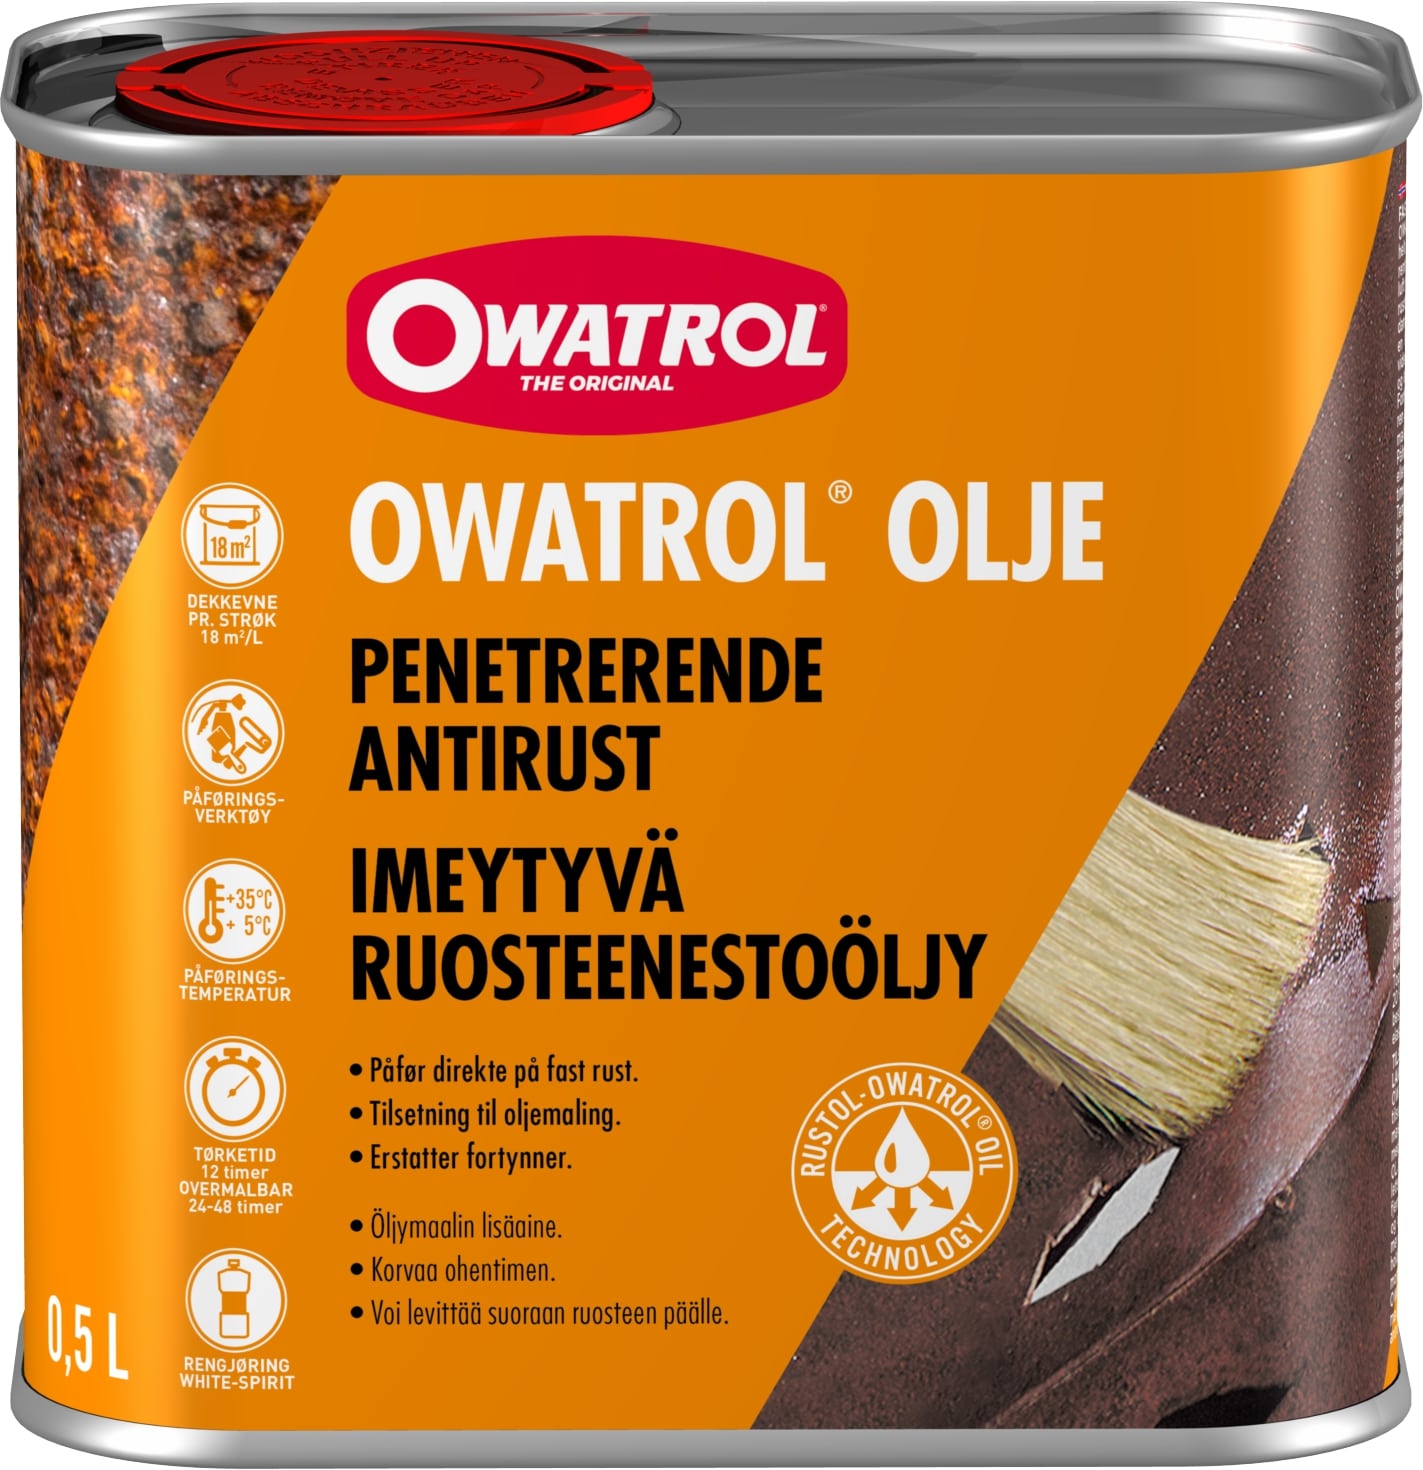 Owatrol Olje antirust 0,5 liter